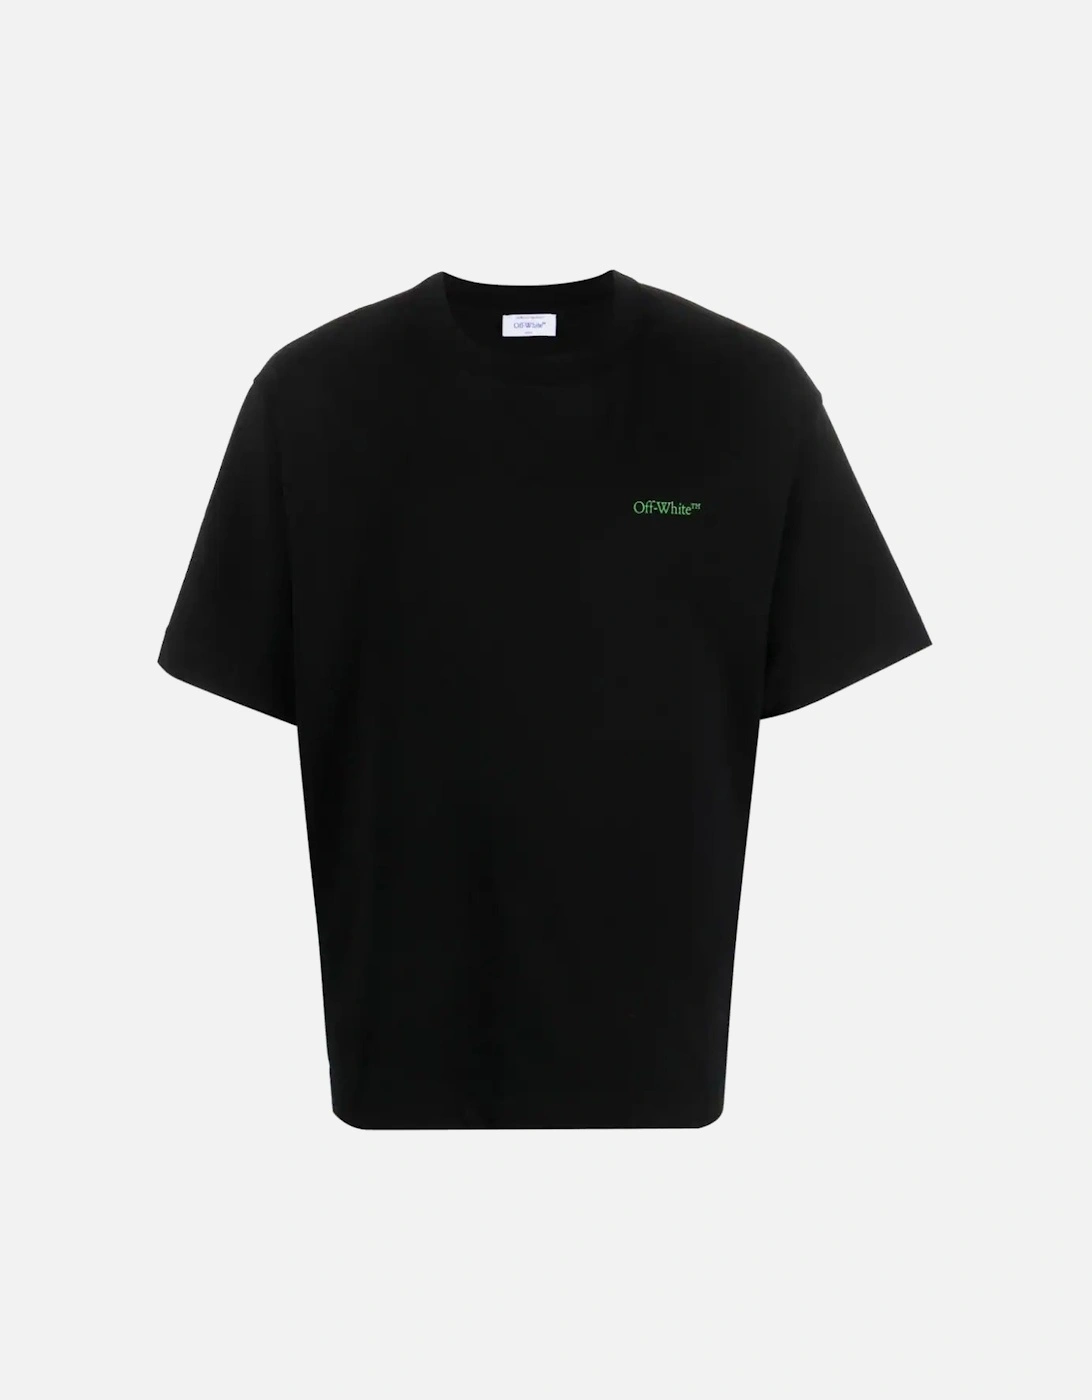 Moon Arrow Printed T-Shirt in Black